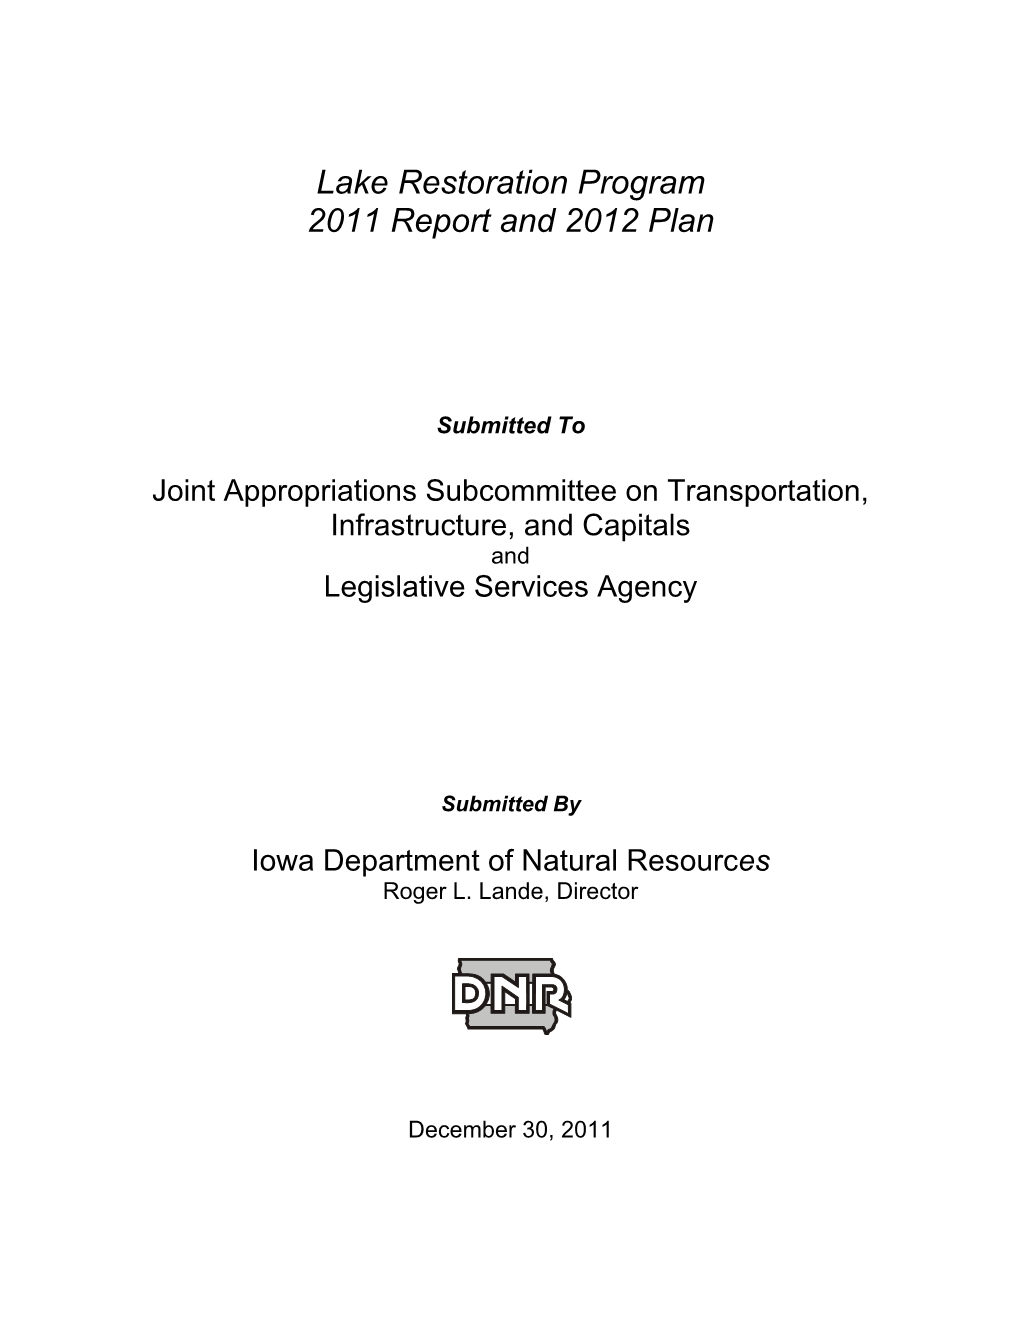 DNR Lake Restoration Program (LRP) Funding As of FY12 (11/30/2011)